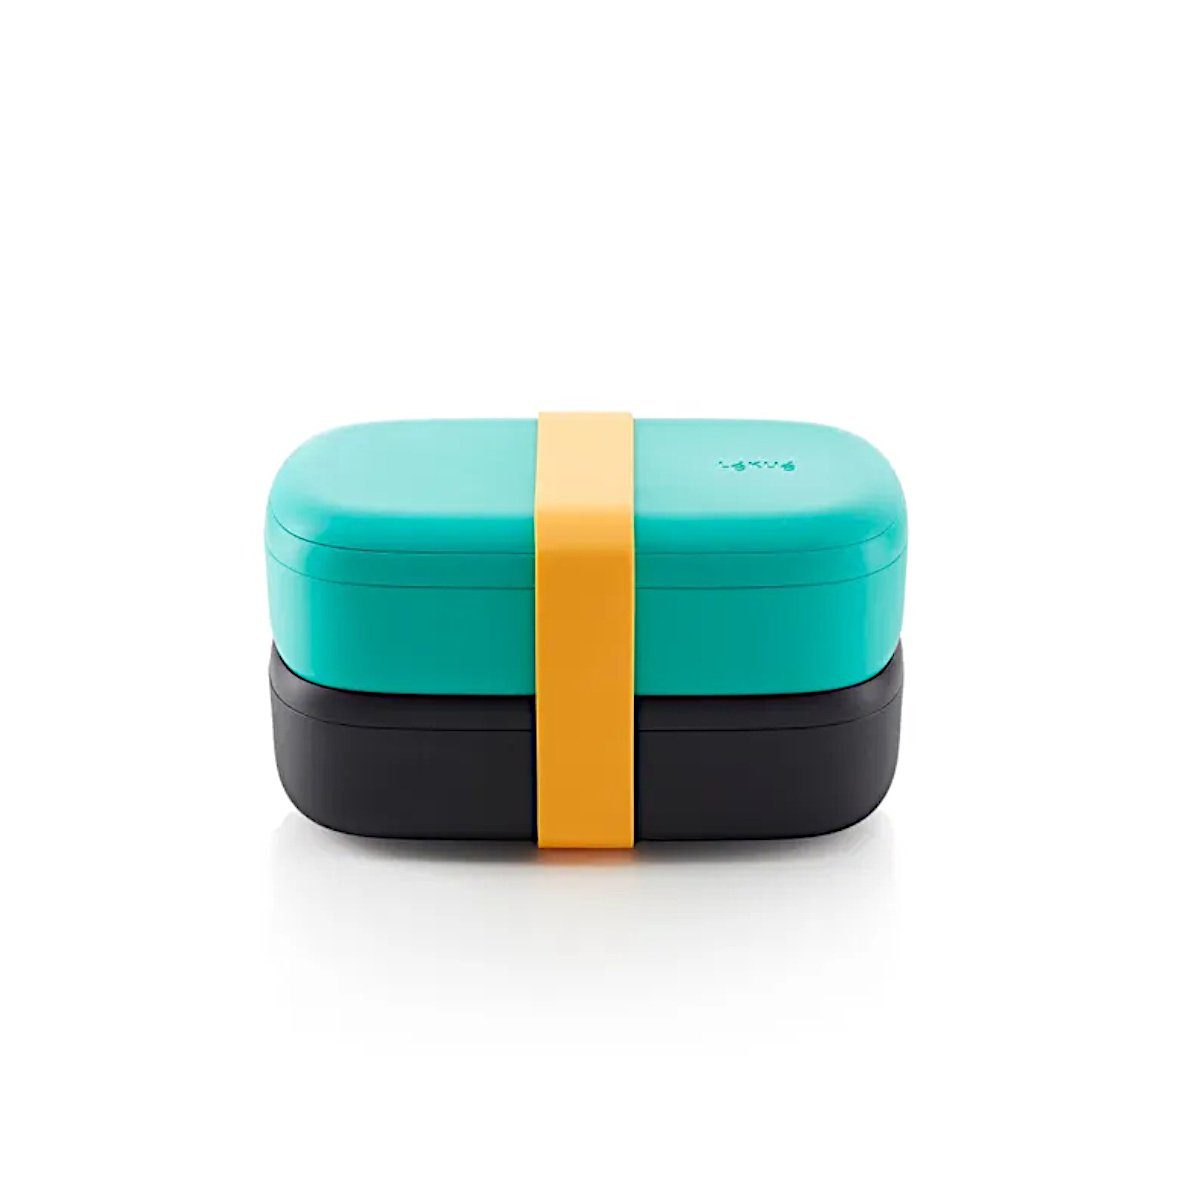 LEKUE Lunchbox - go Bento lebensmittelsicher Lunchbox türkis Kunststoff to Farbwahl,